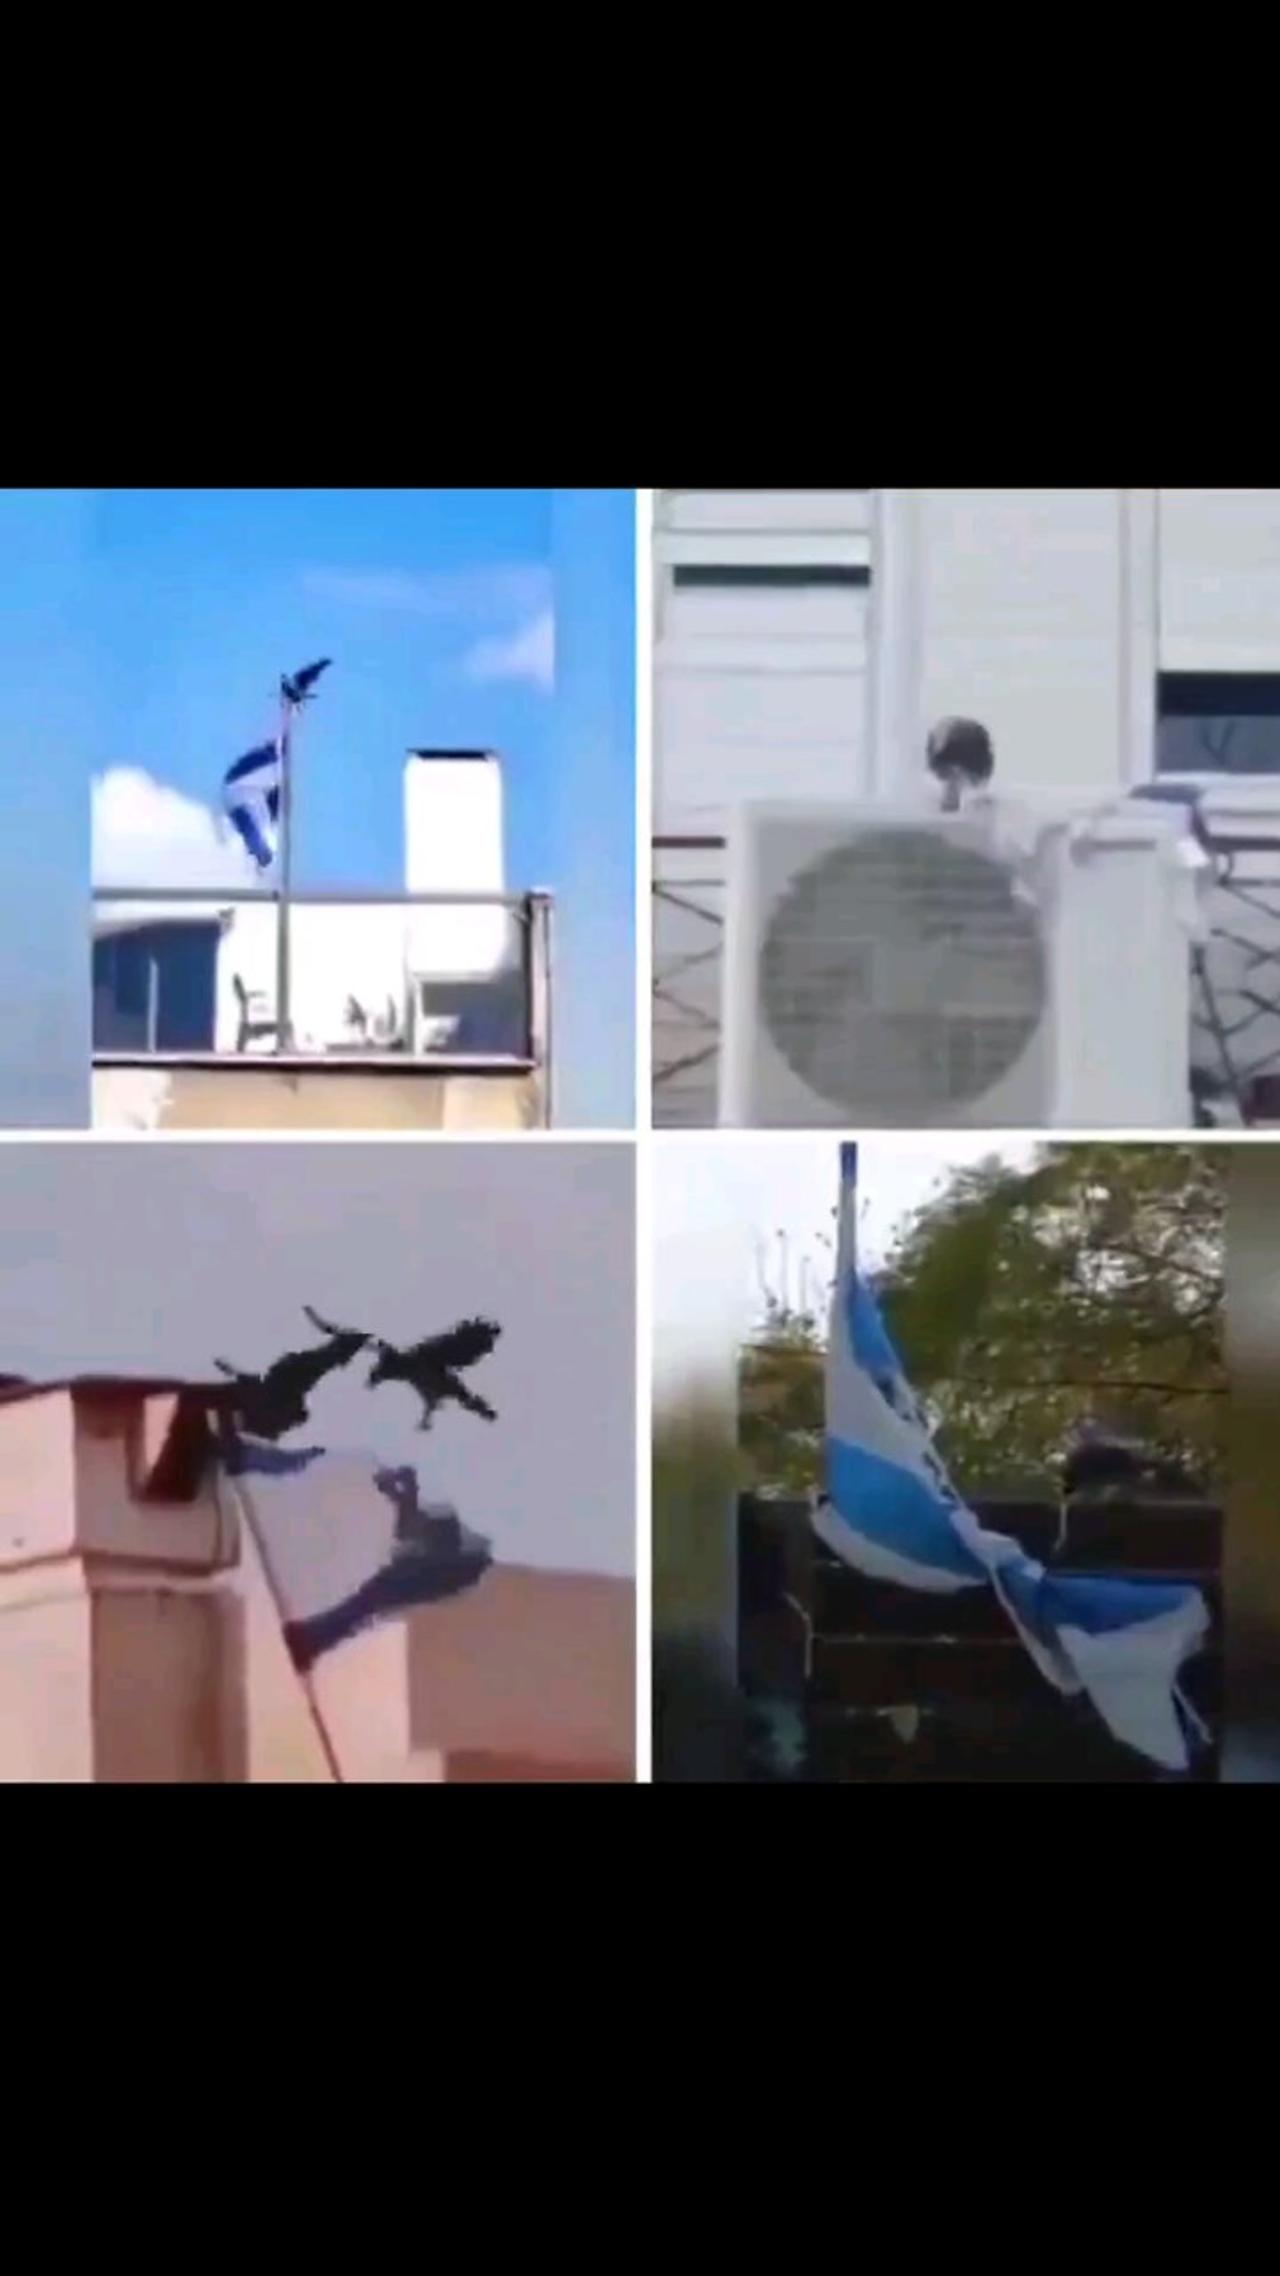 anti-semitic birds at work. deleting israel flags